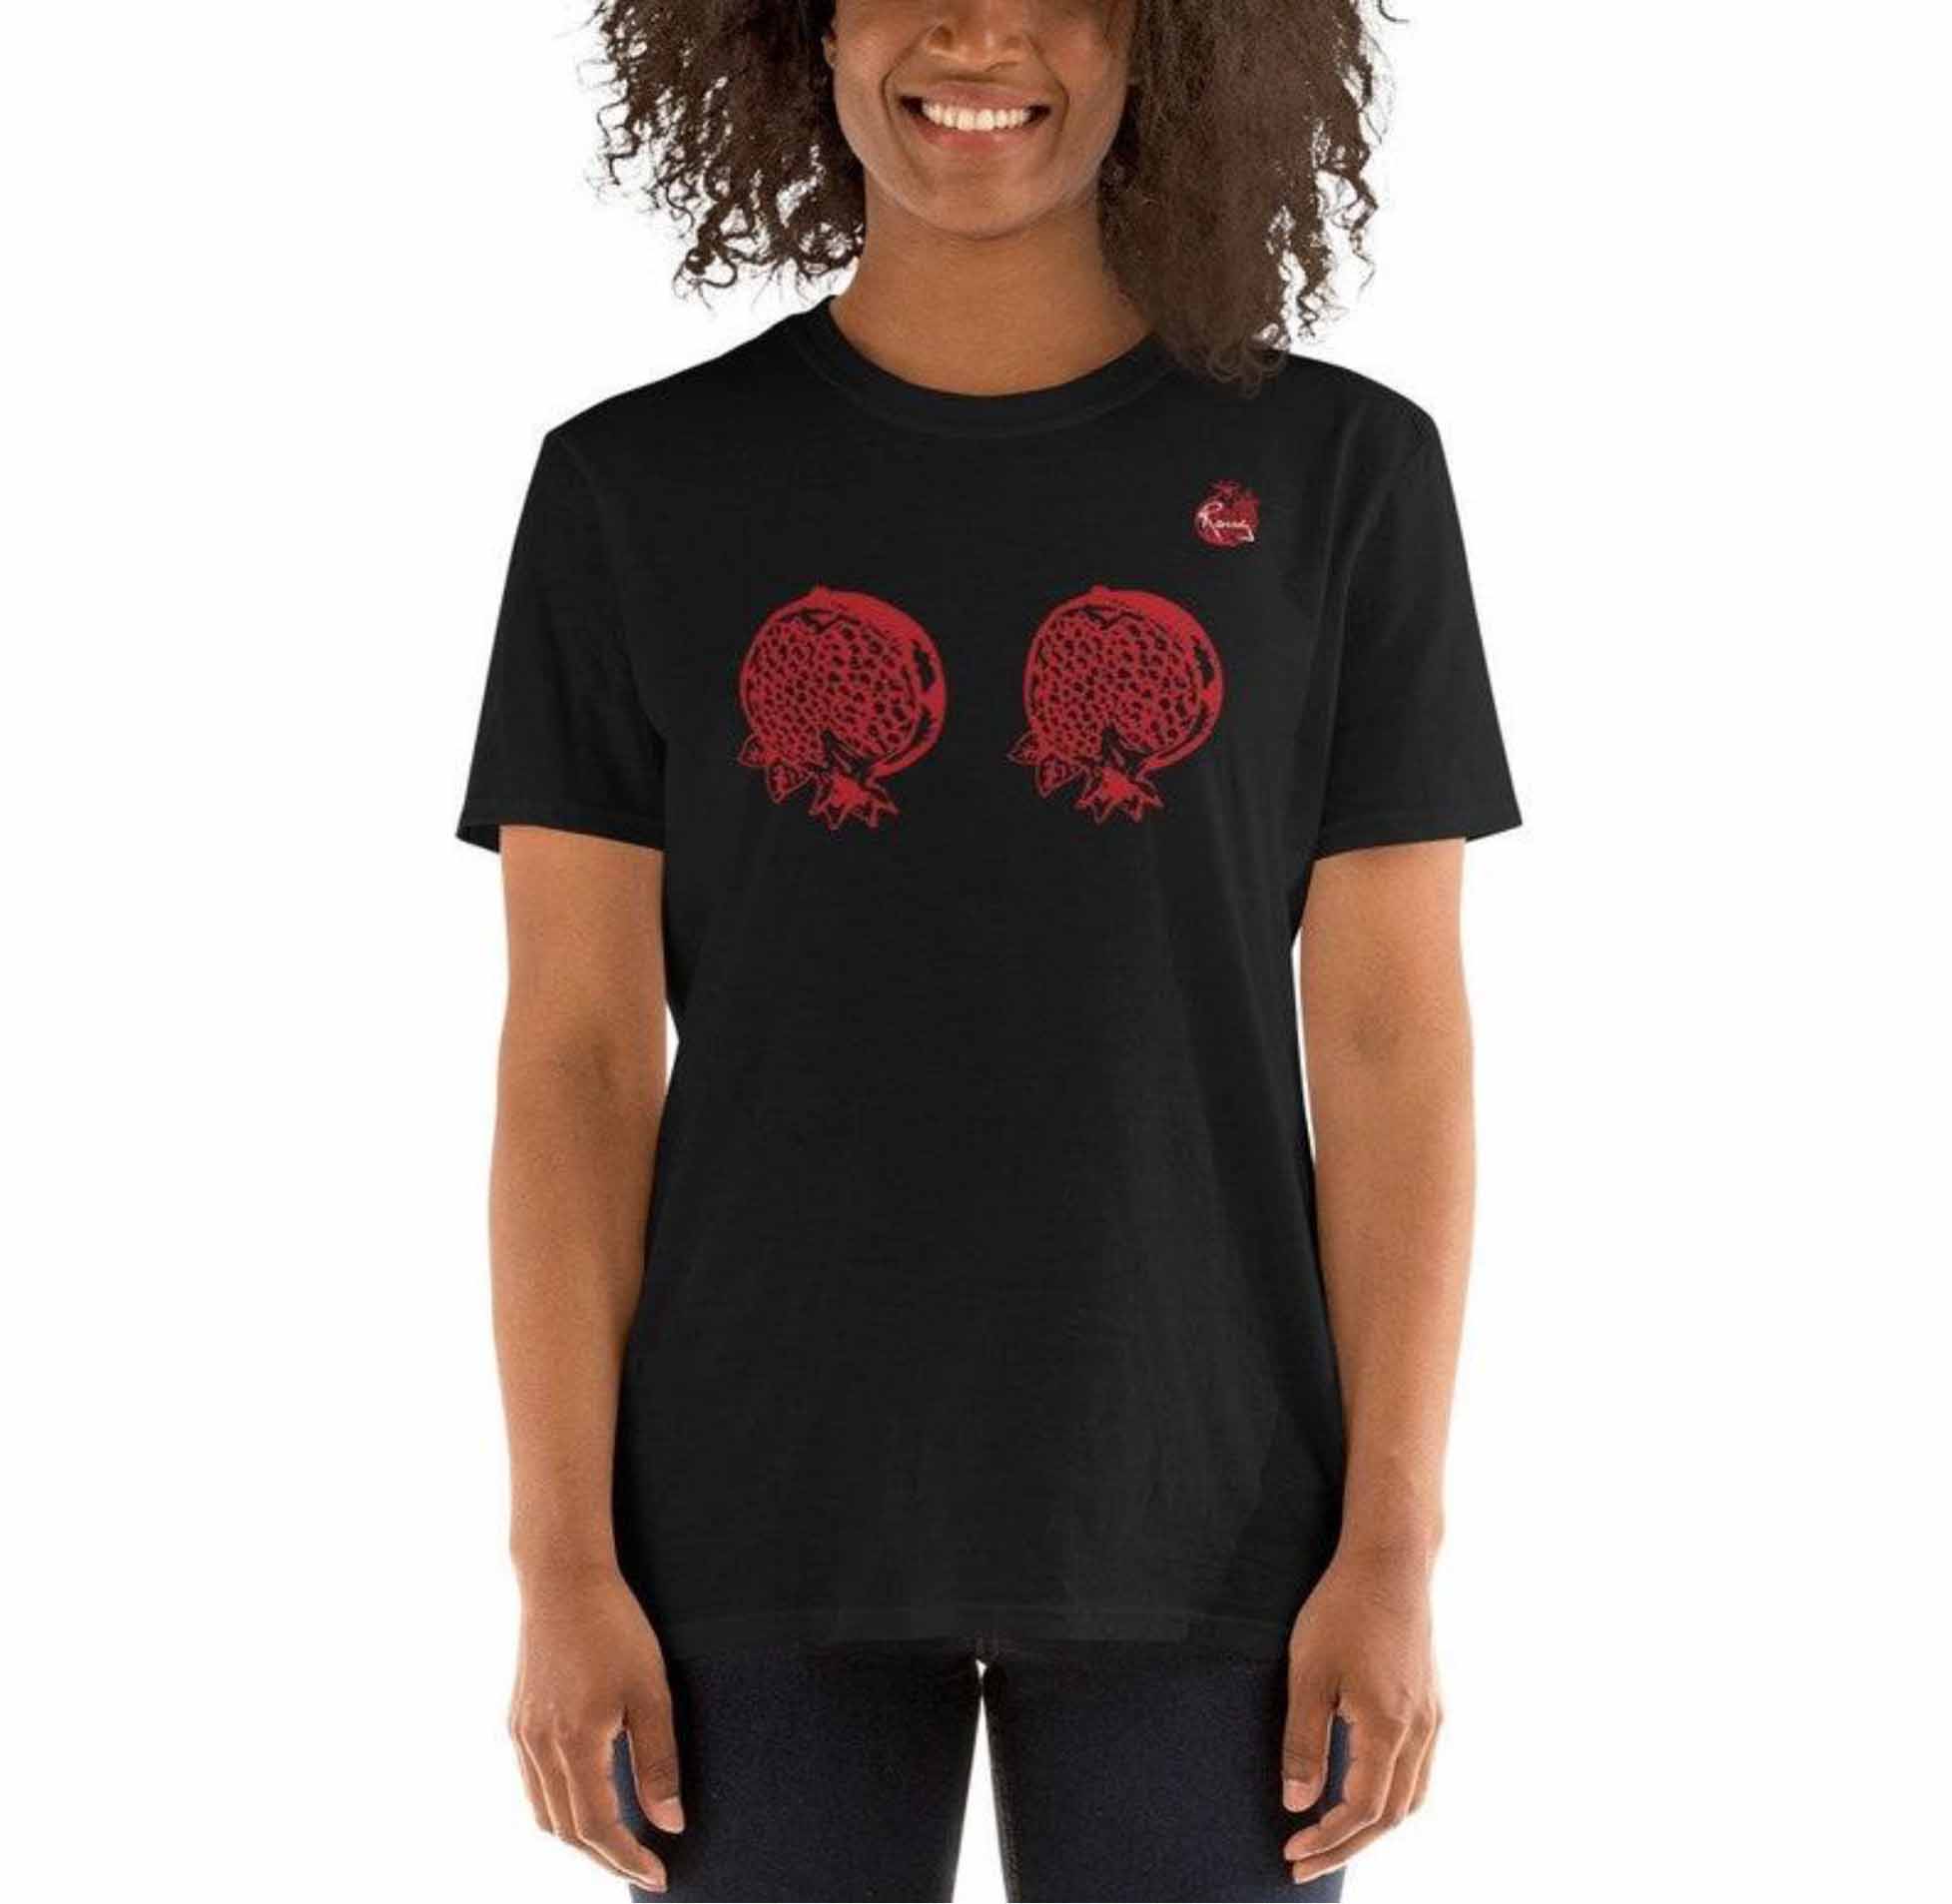 Belinda Blinked pomegranate T shirt at Etsy